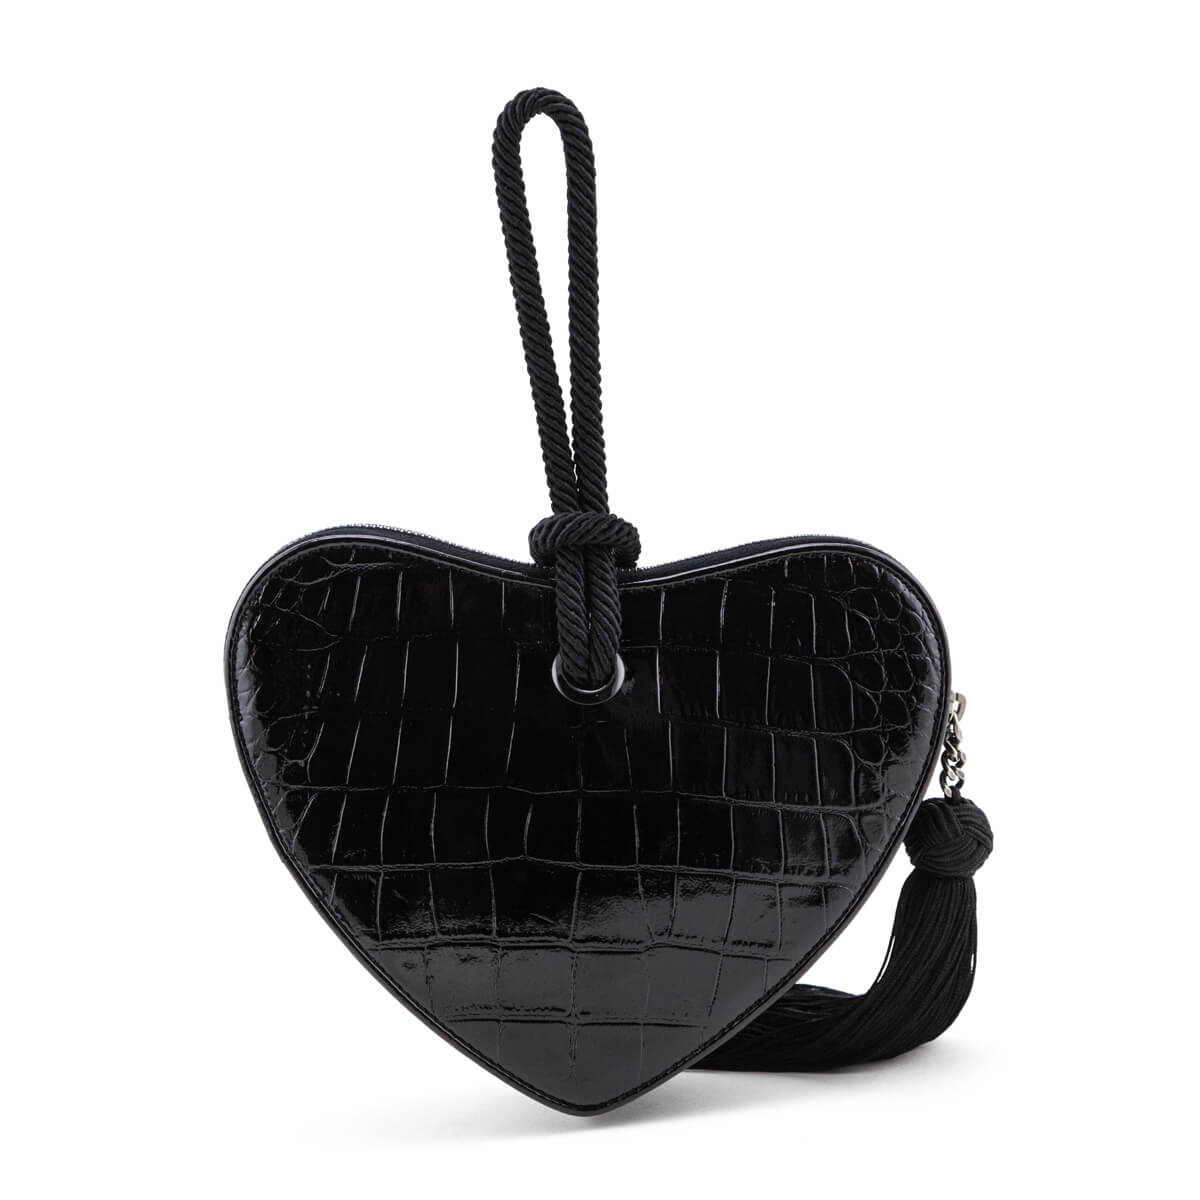 coeur heart shaped bag